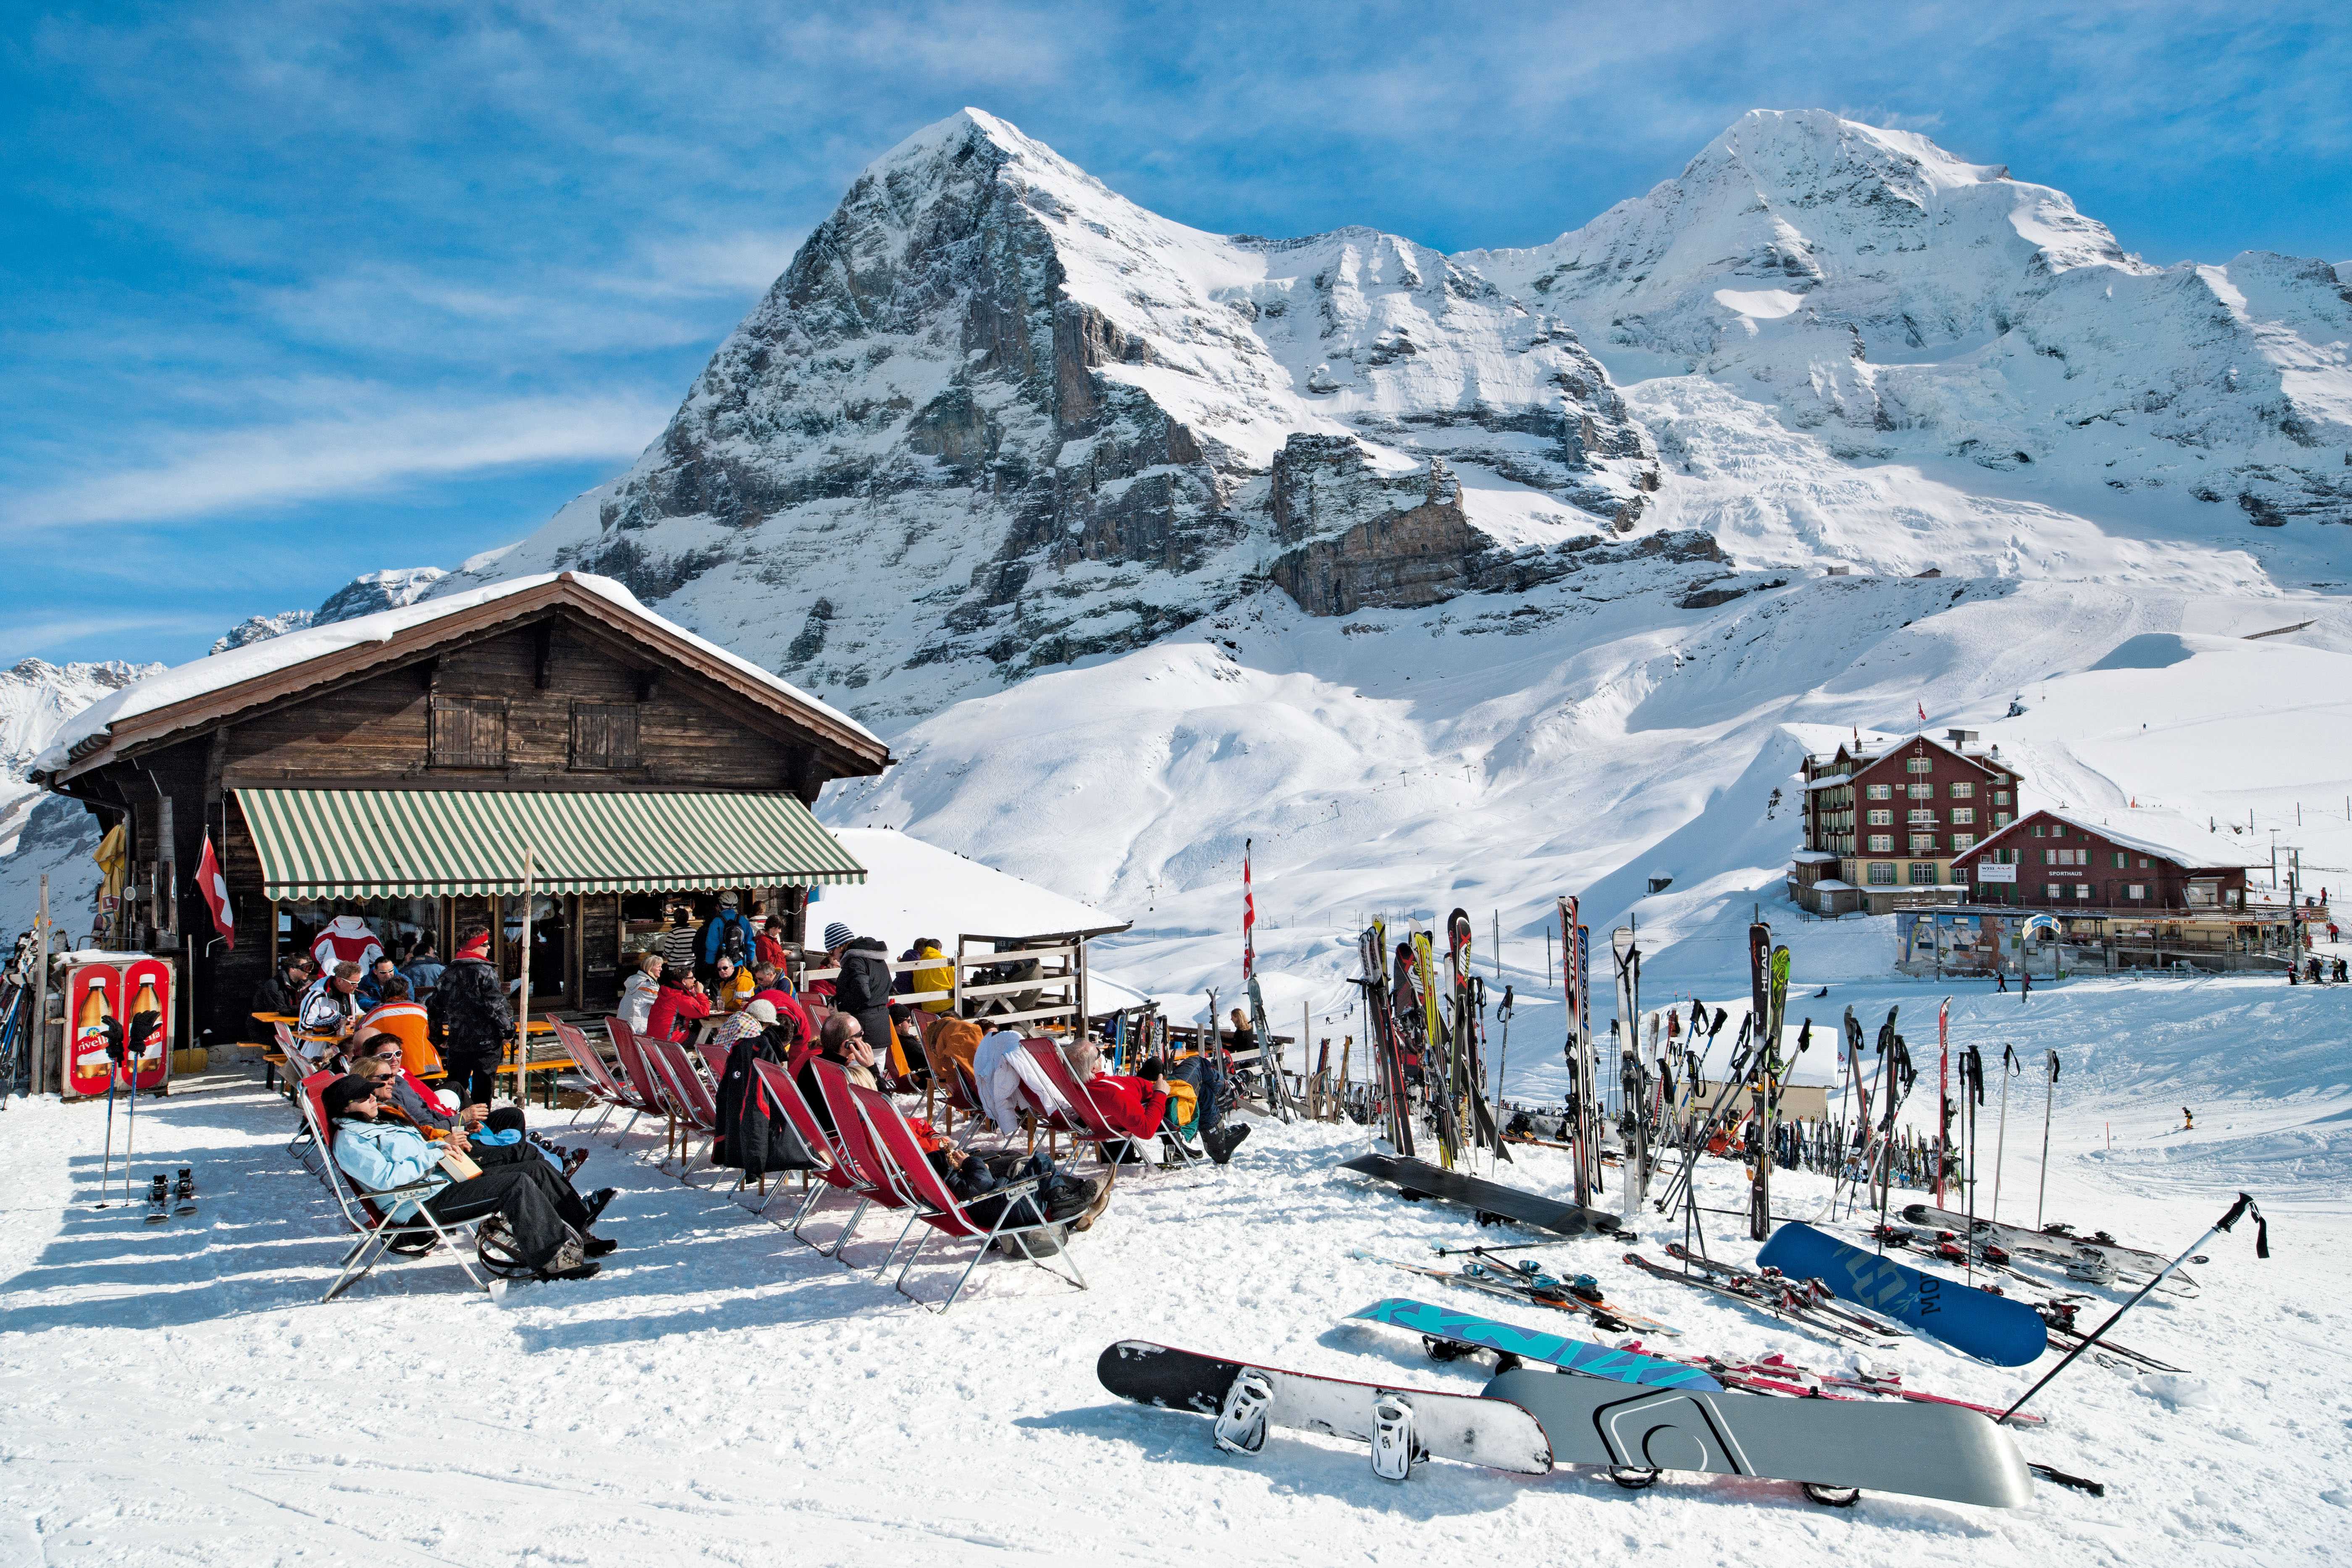 Alps ski skiing. Швейцария Альпы горнолыжные курорты. Церматт Швейцария горнолыжный курорт. Швейцария Гриндельвальд Венген. Венген Швейцария горнолыжный курорт.